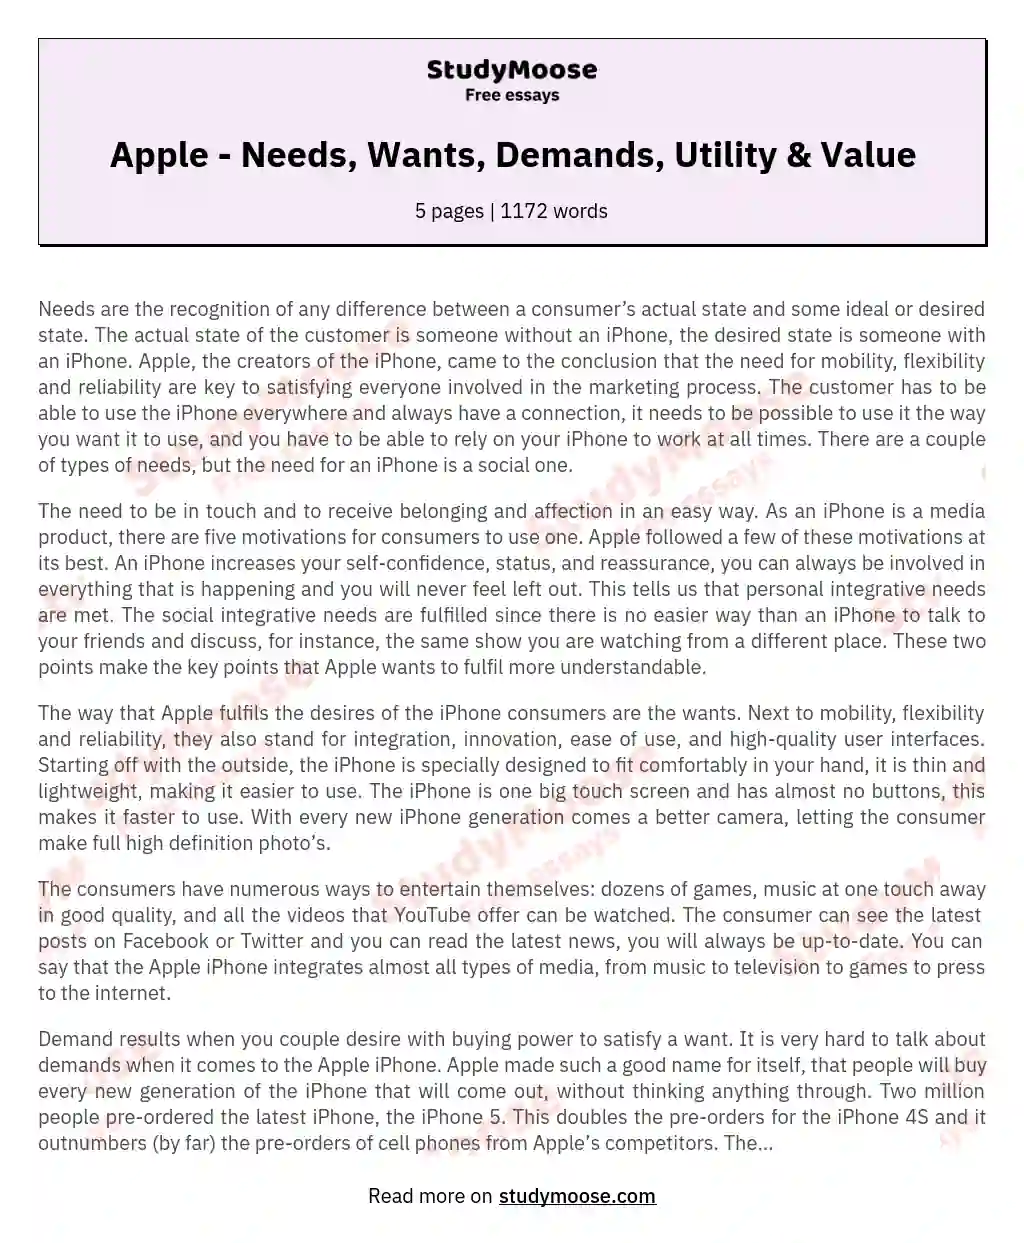 Apple - Needs, Wants, Demands, Utility & Value